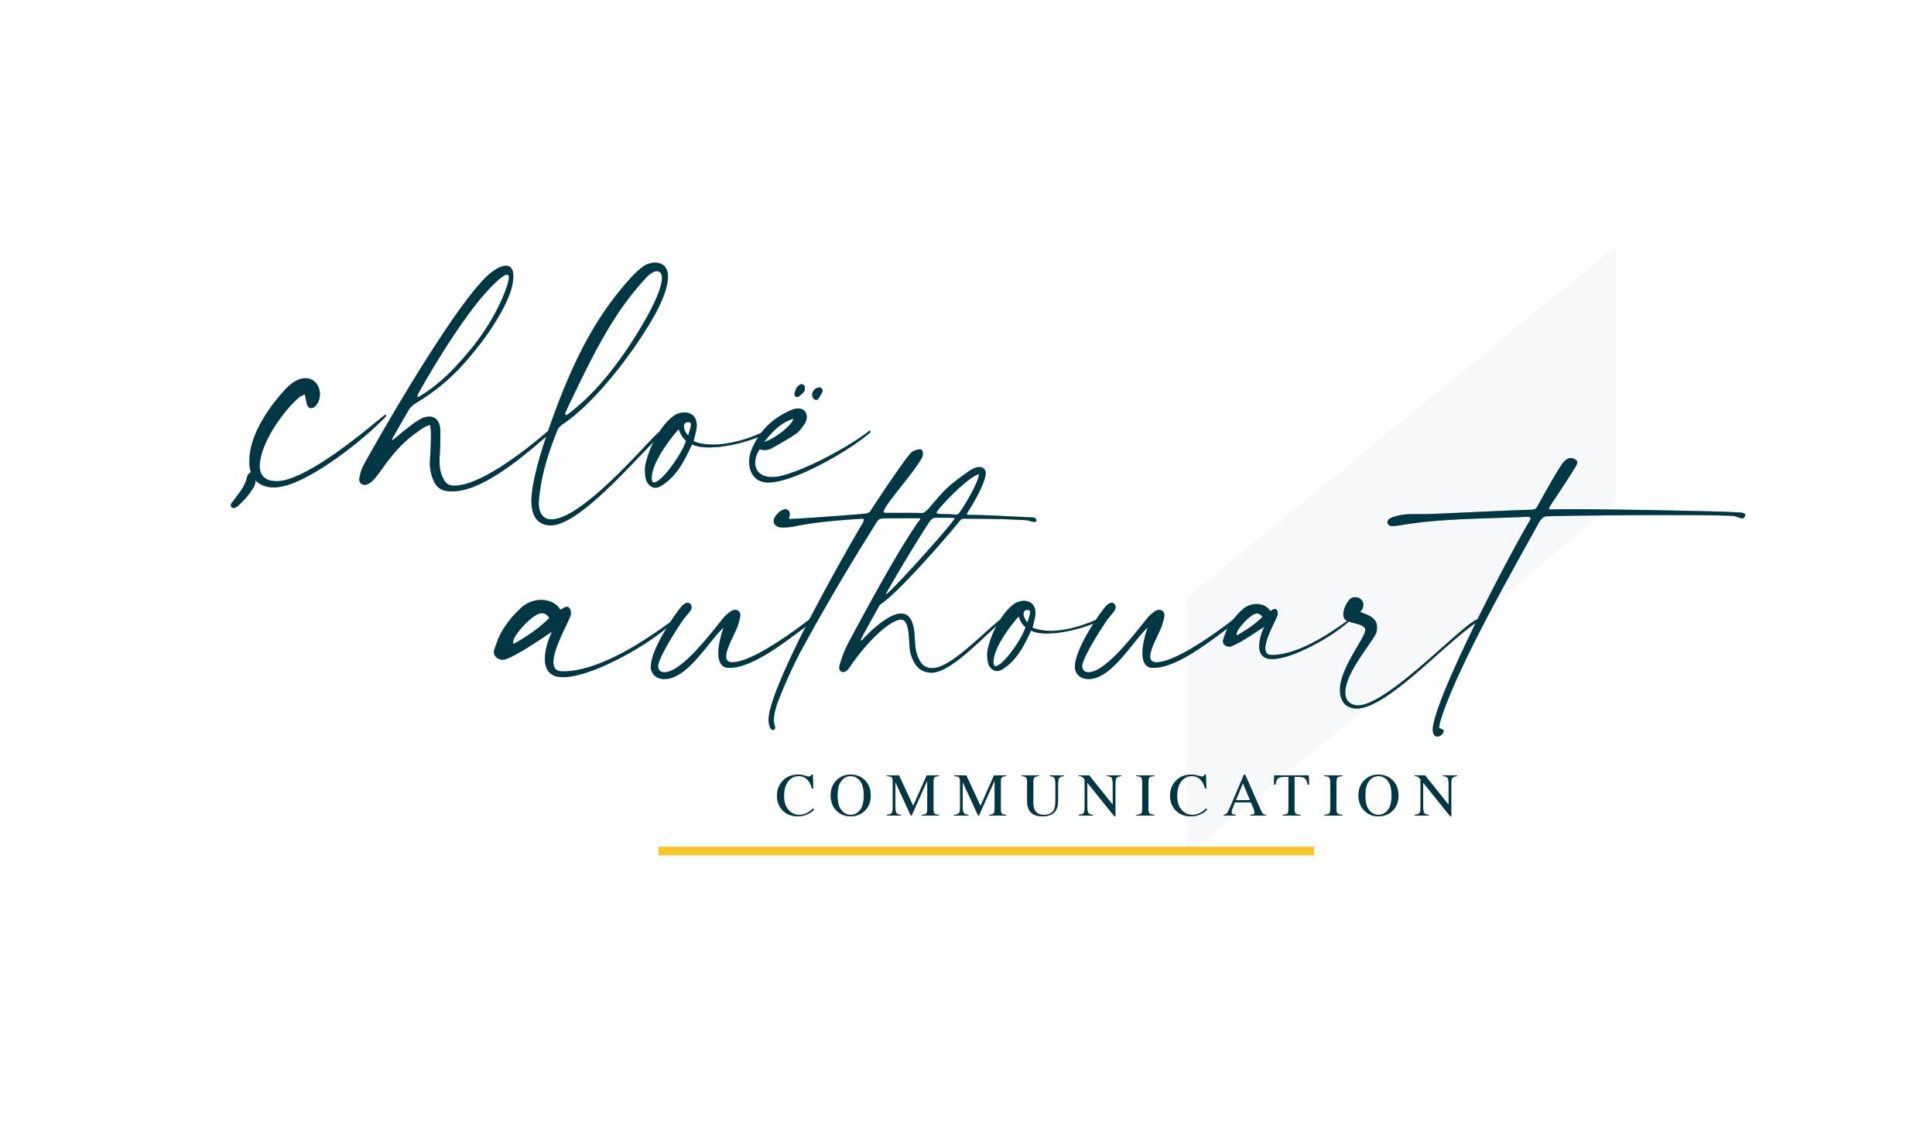 Chloë AUTHOUART Communication